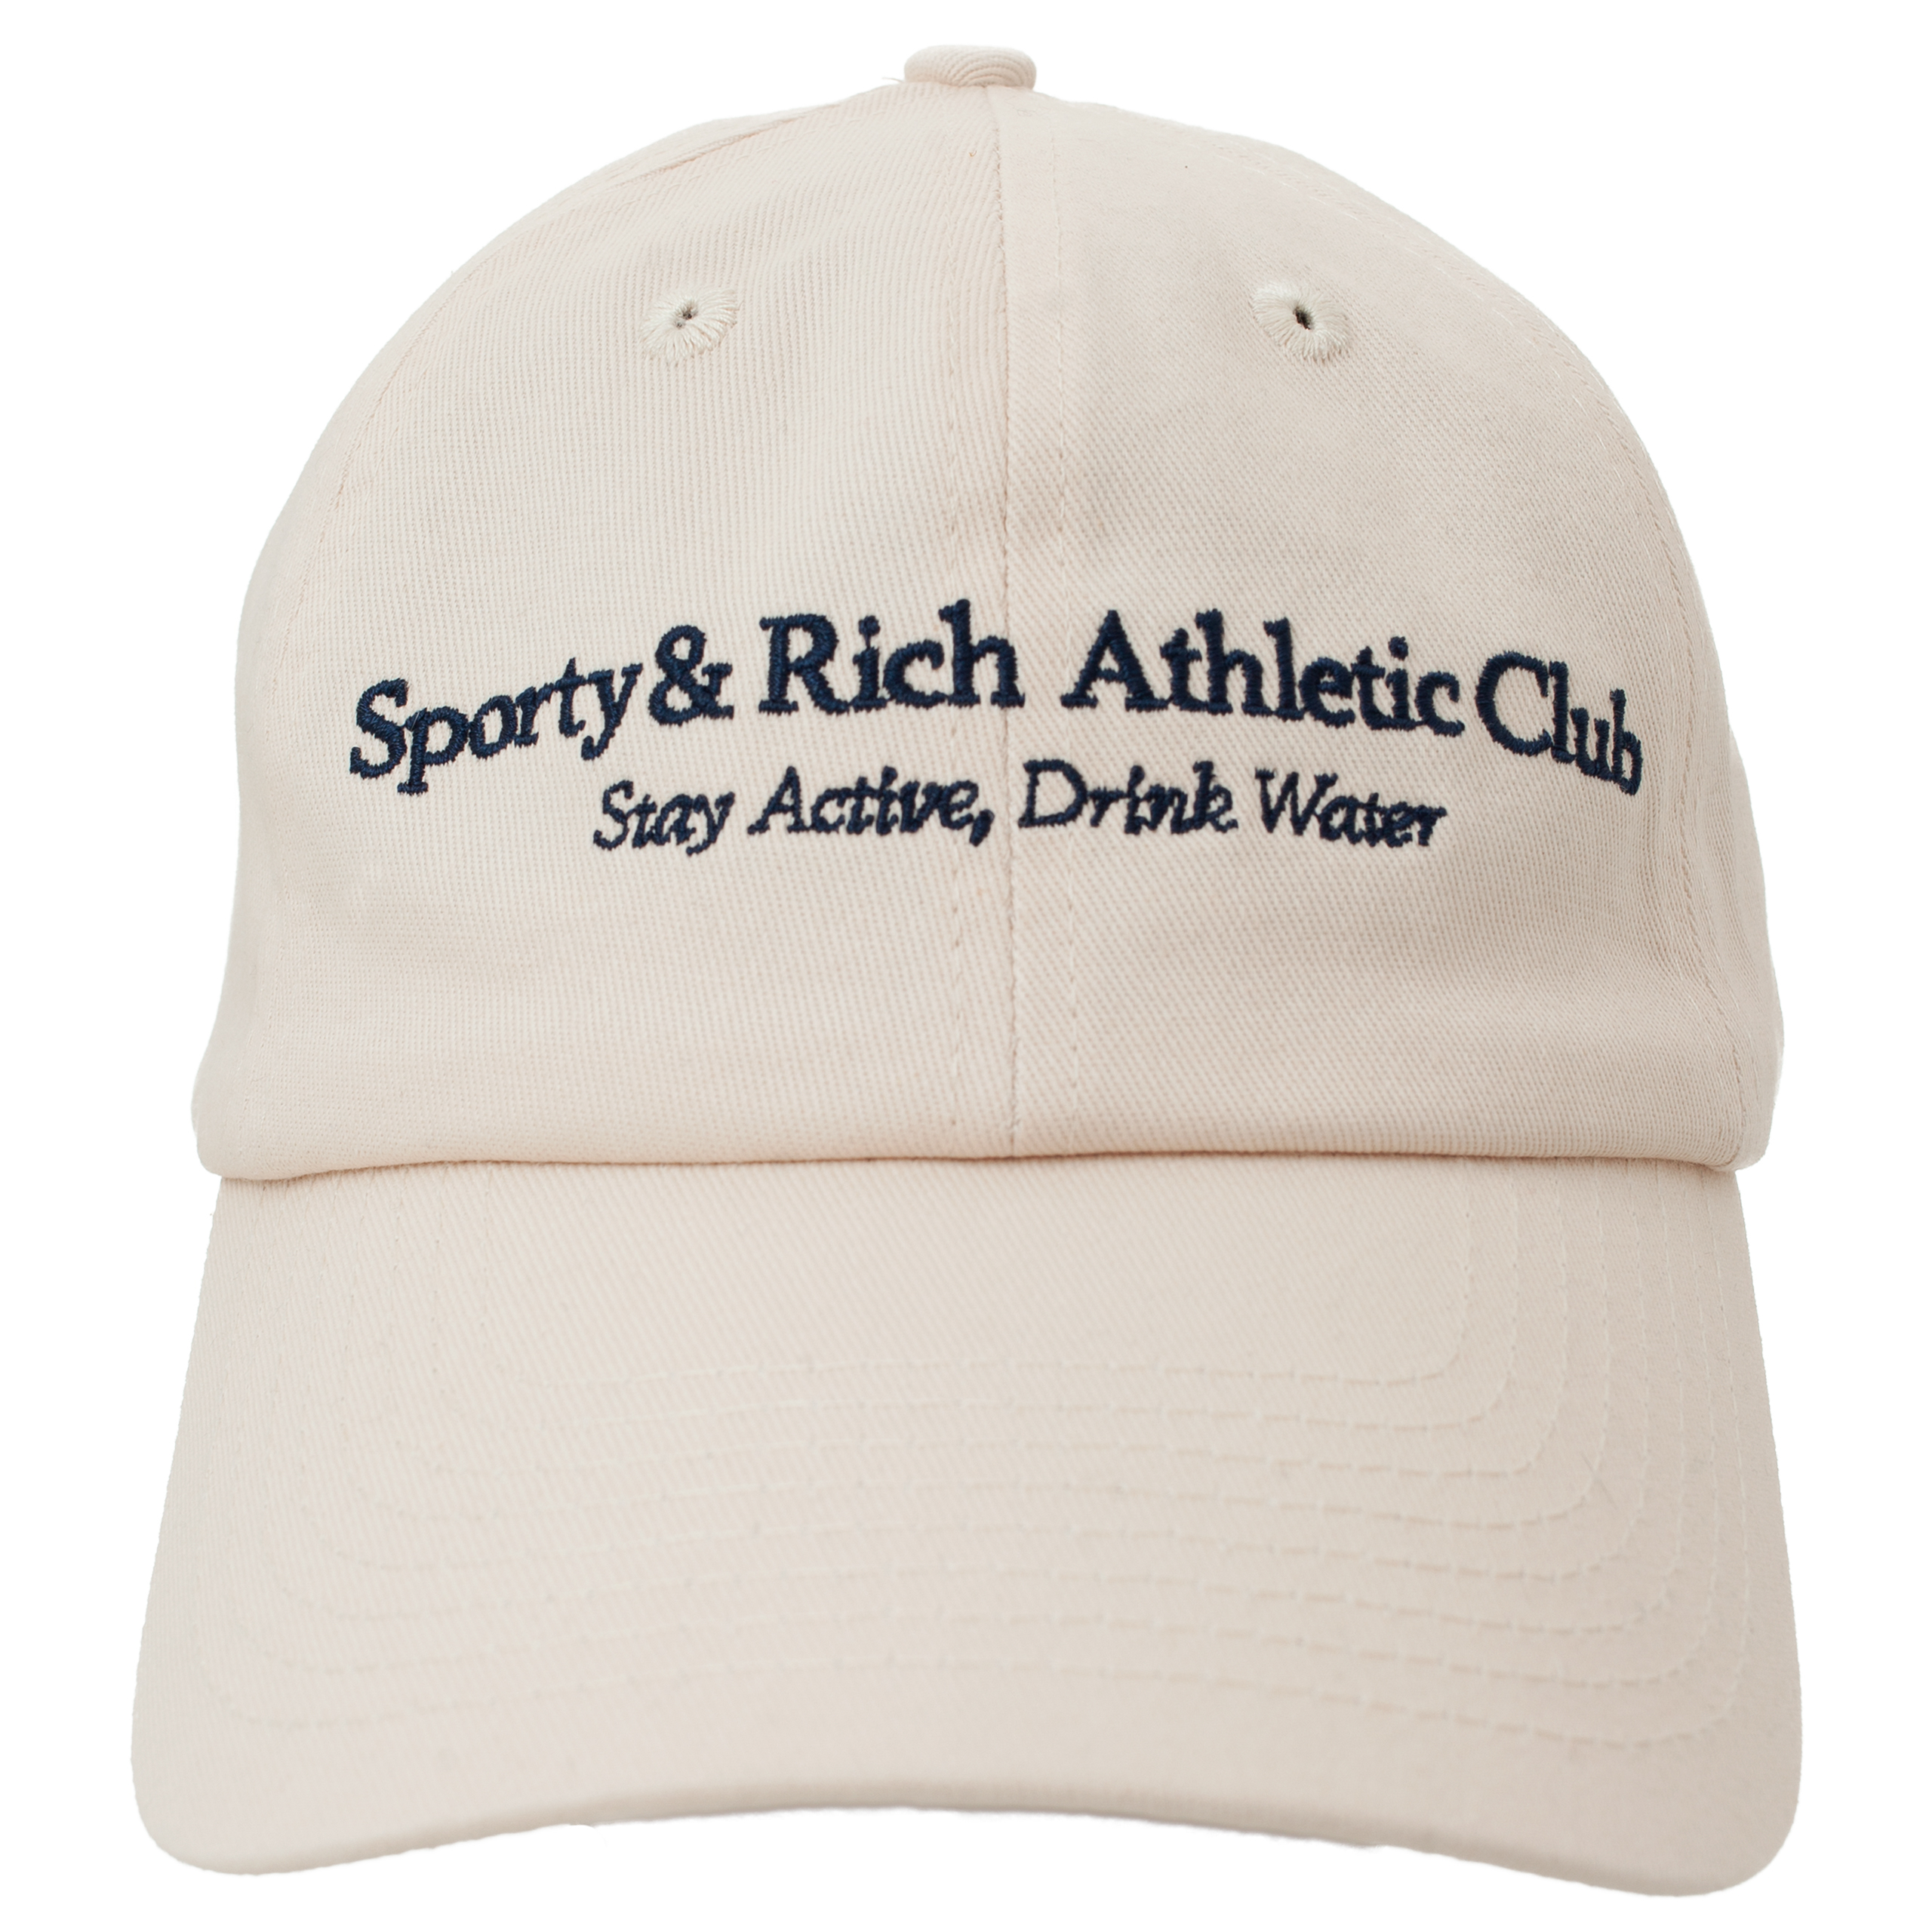 Кепка с вышивкой Athletic Club SPORTY & RICH AC841CR, размер One Size - фото 1